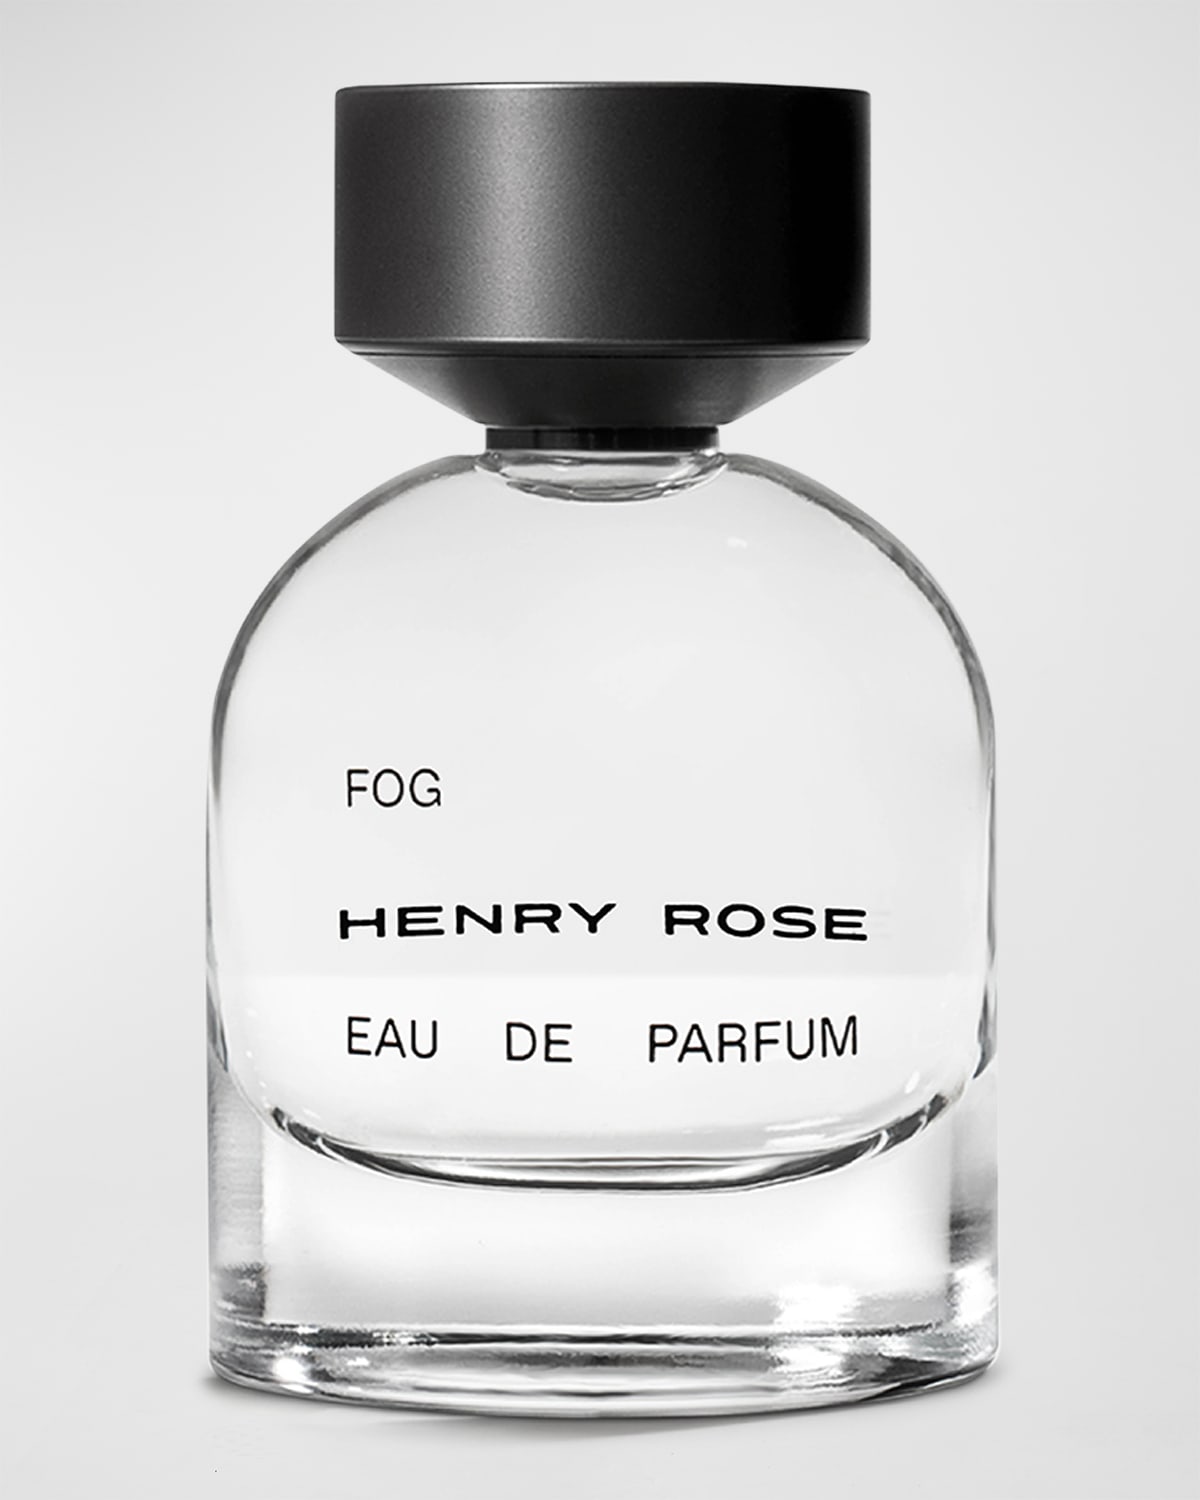 HENRY ROSE Fog Eau de Parfum, 1.7 oz.